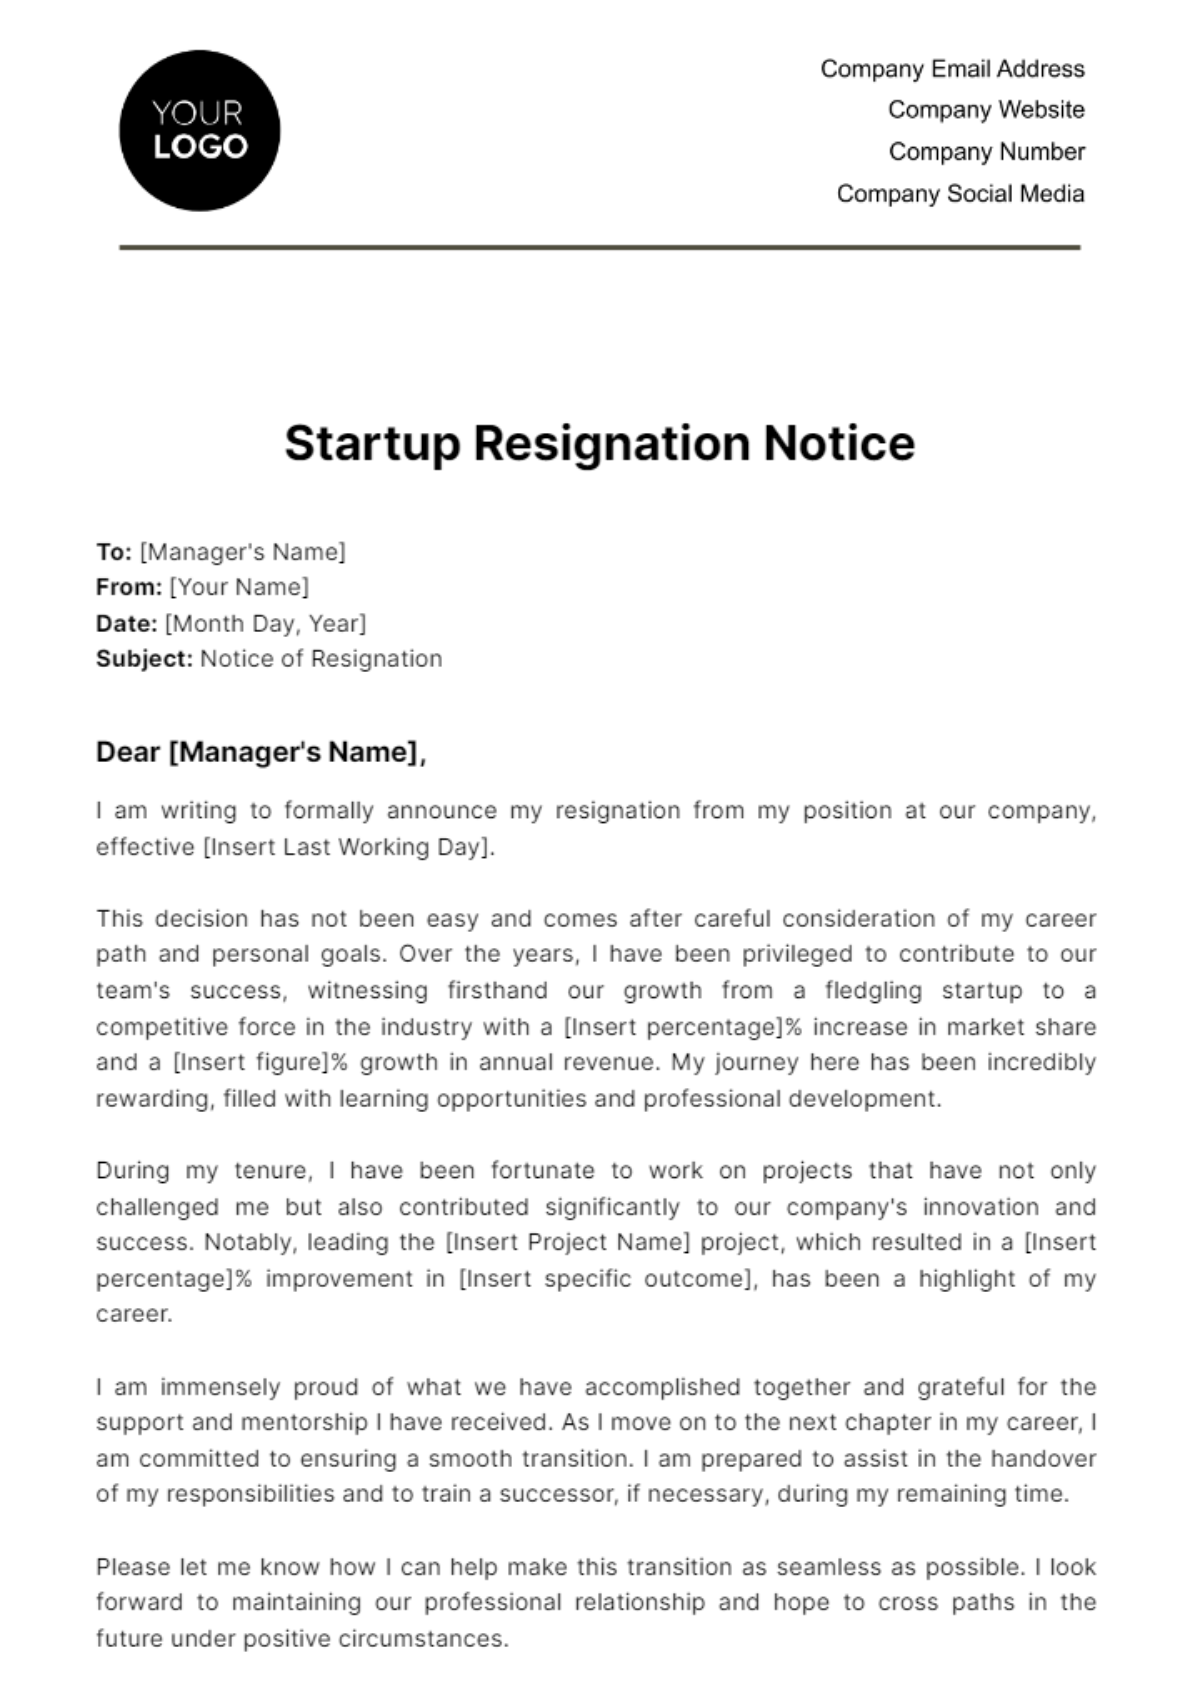 Startup Resignation Notice Template